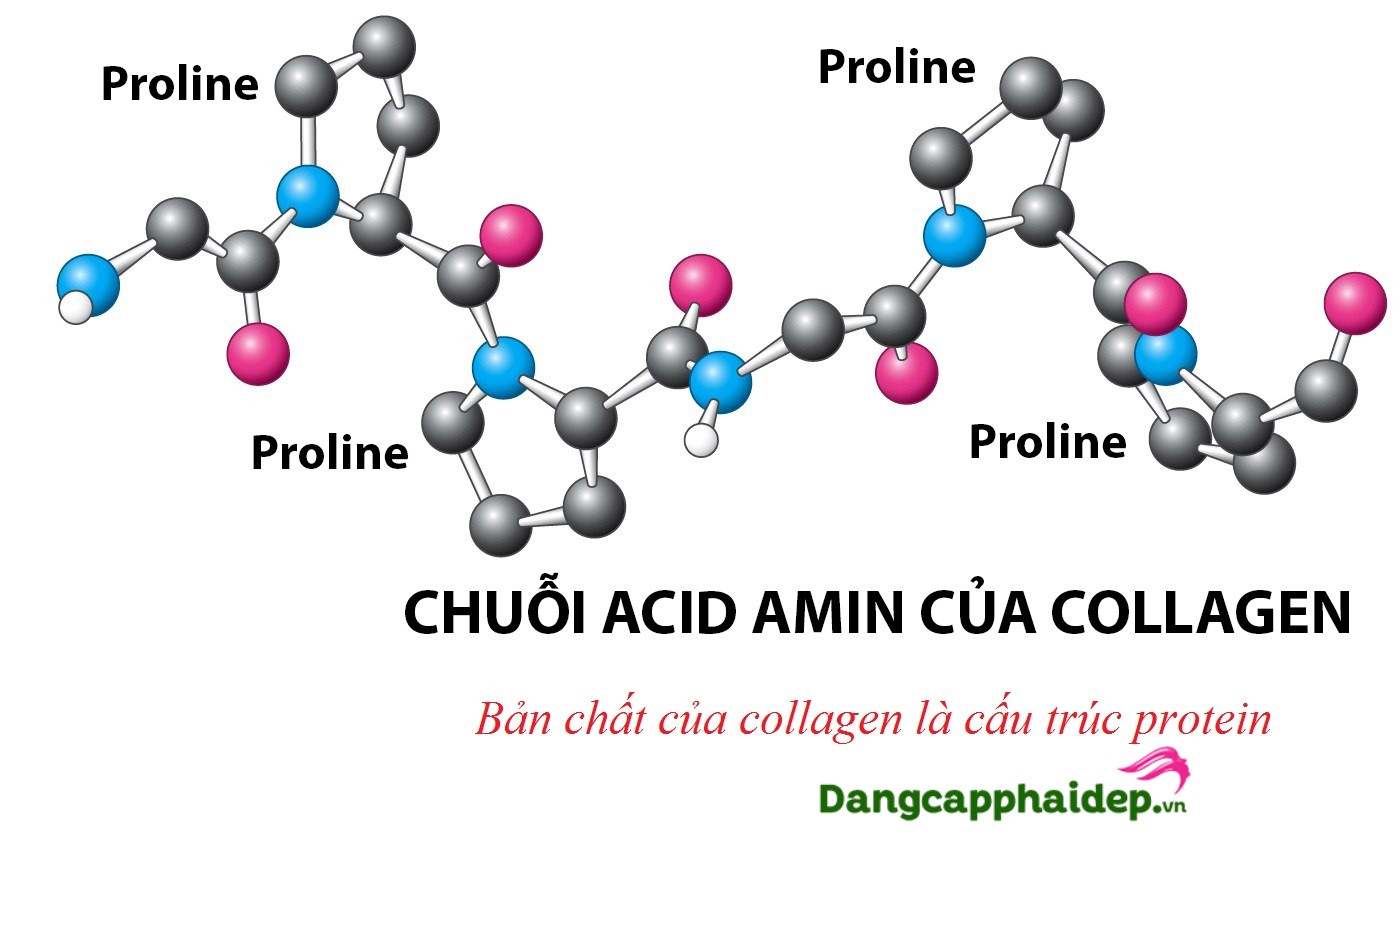 ba-quan-trong-cua-collagen-1